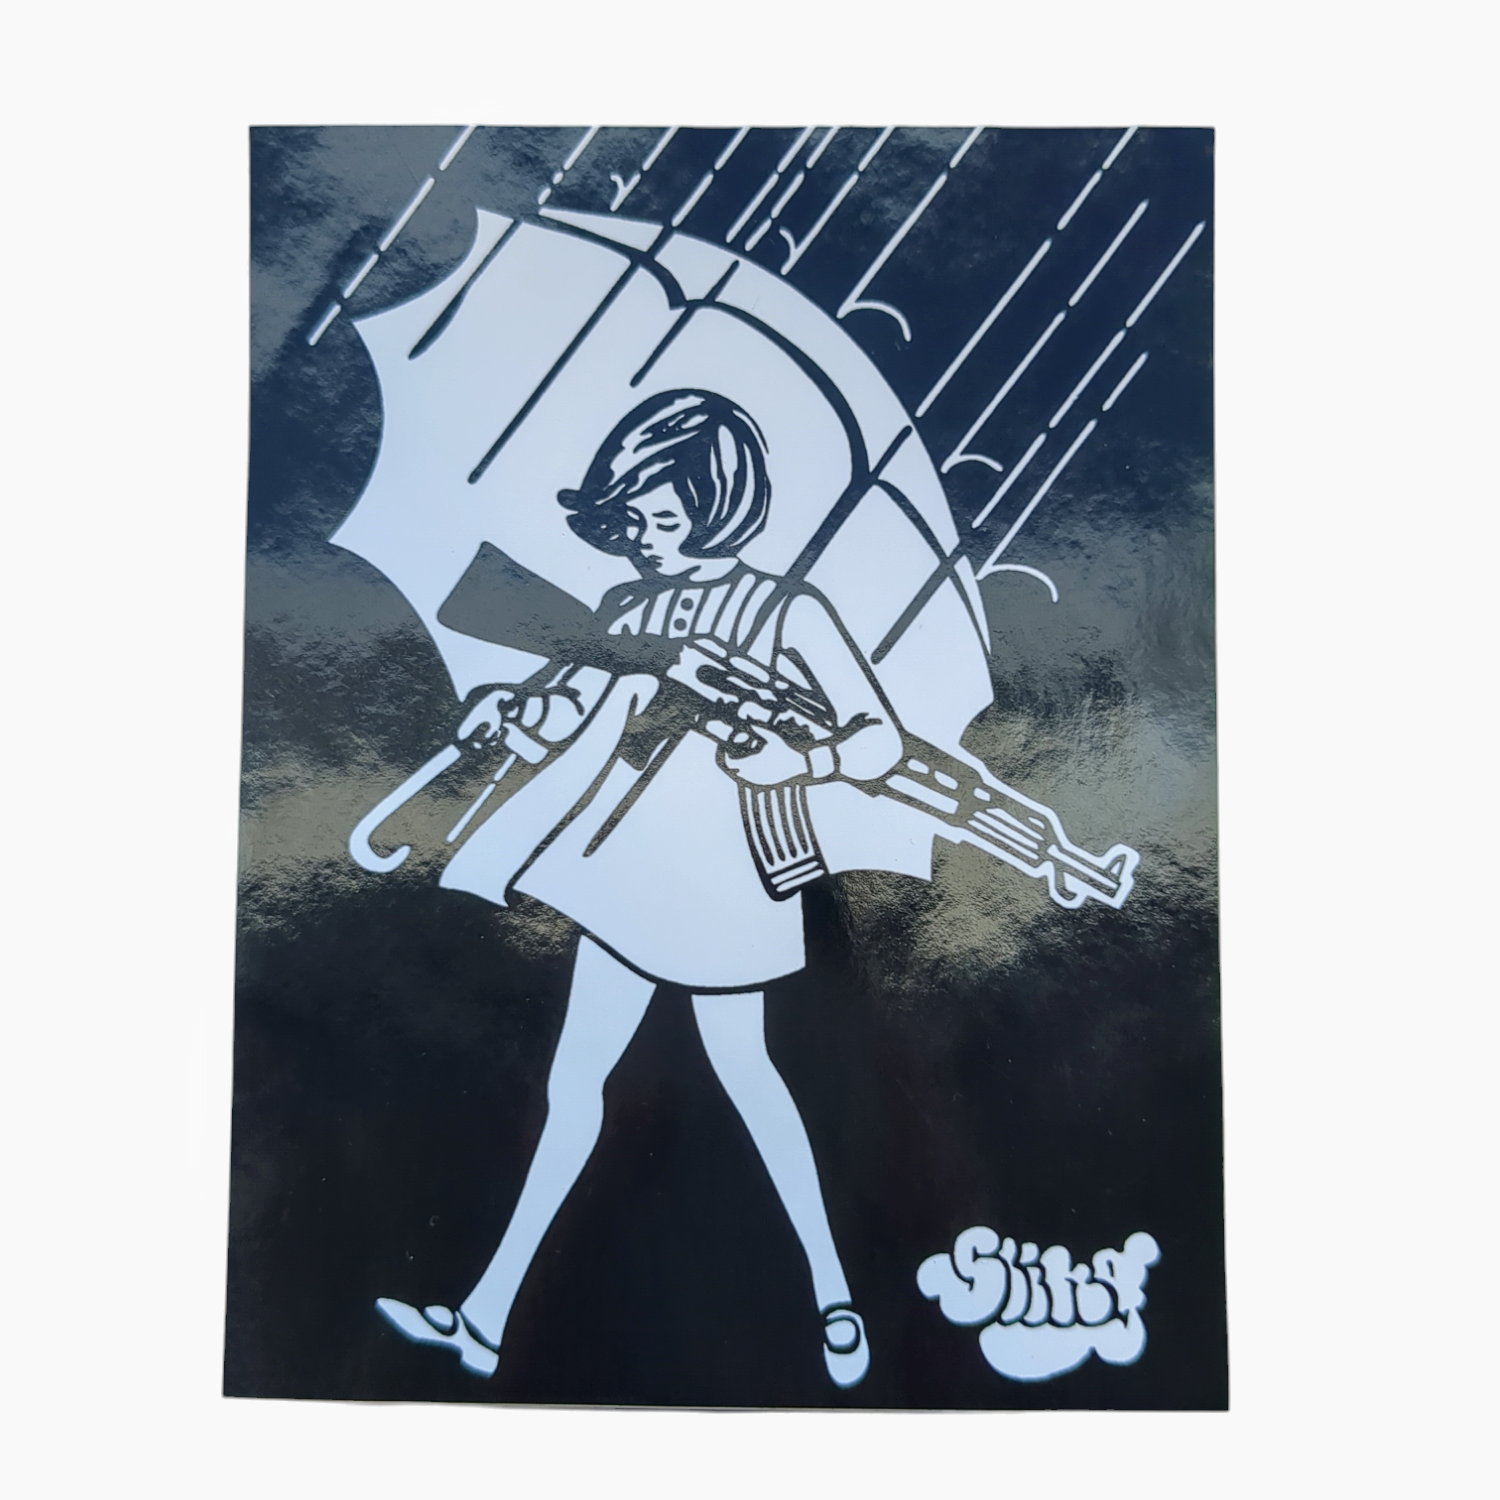 Slinger Assault Girl Sticker  Includes (1) 5.5 x 4.25” vinyl sticker